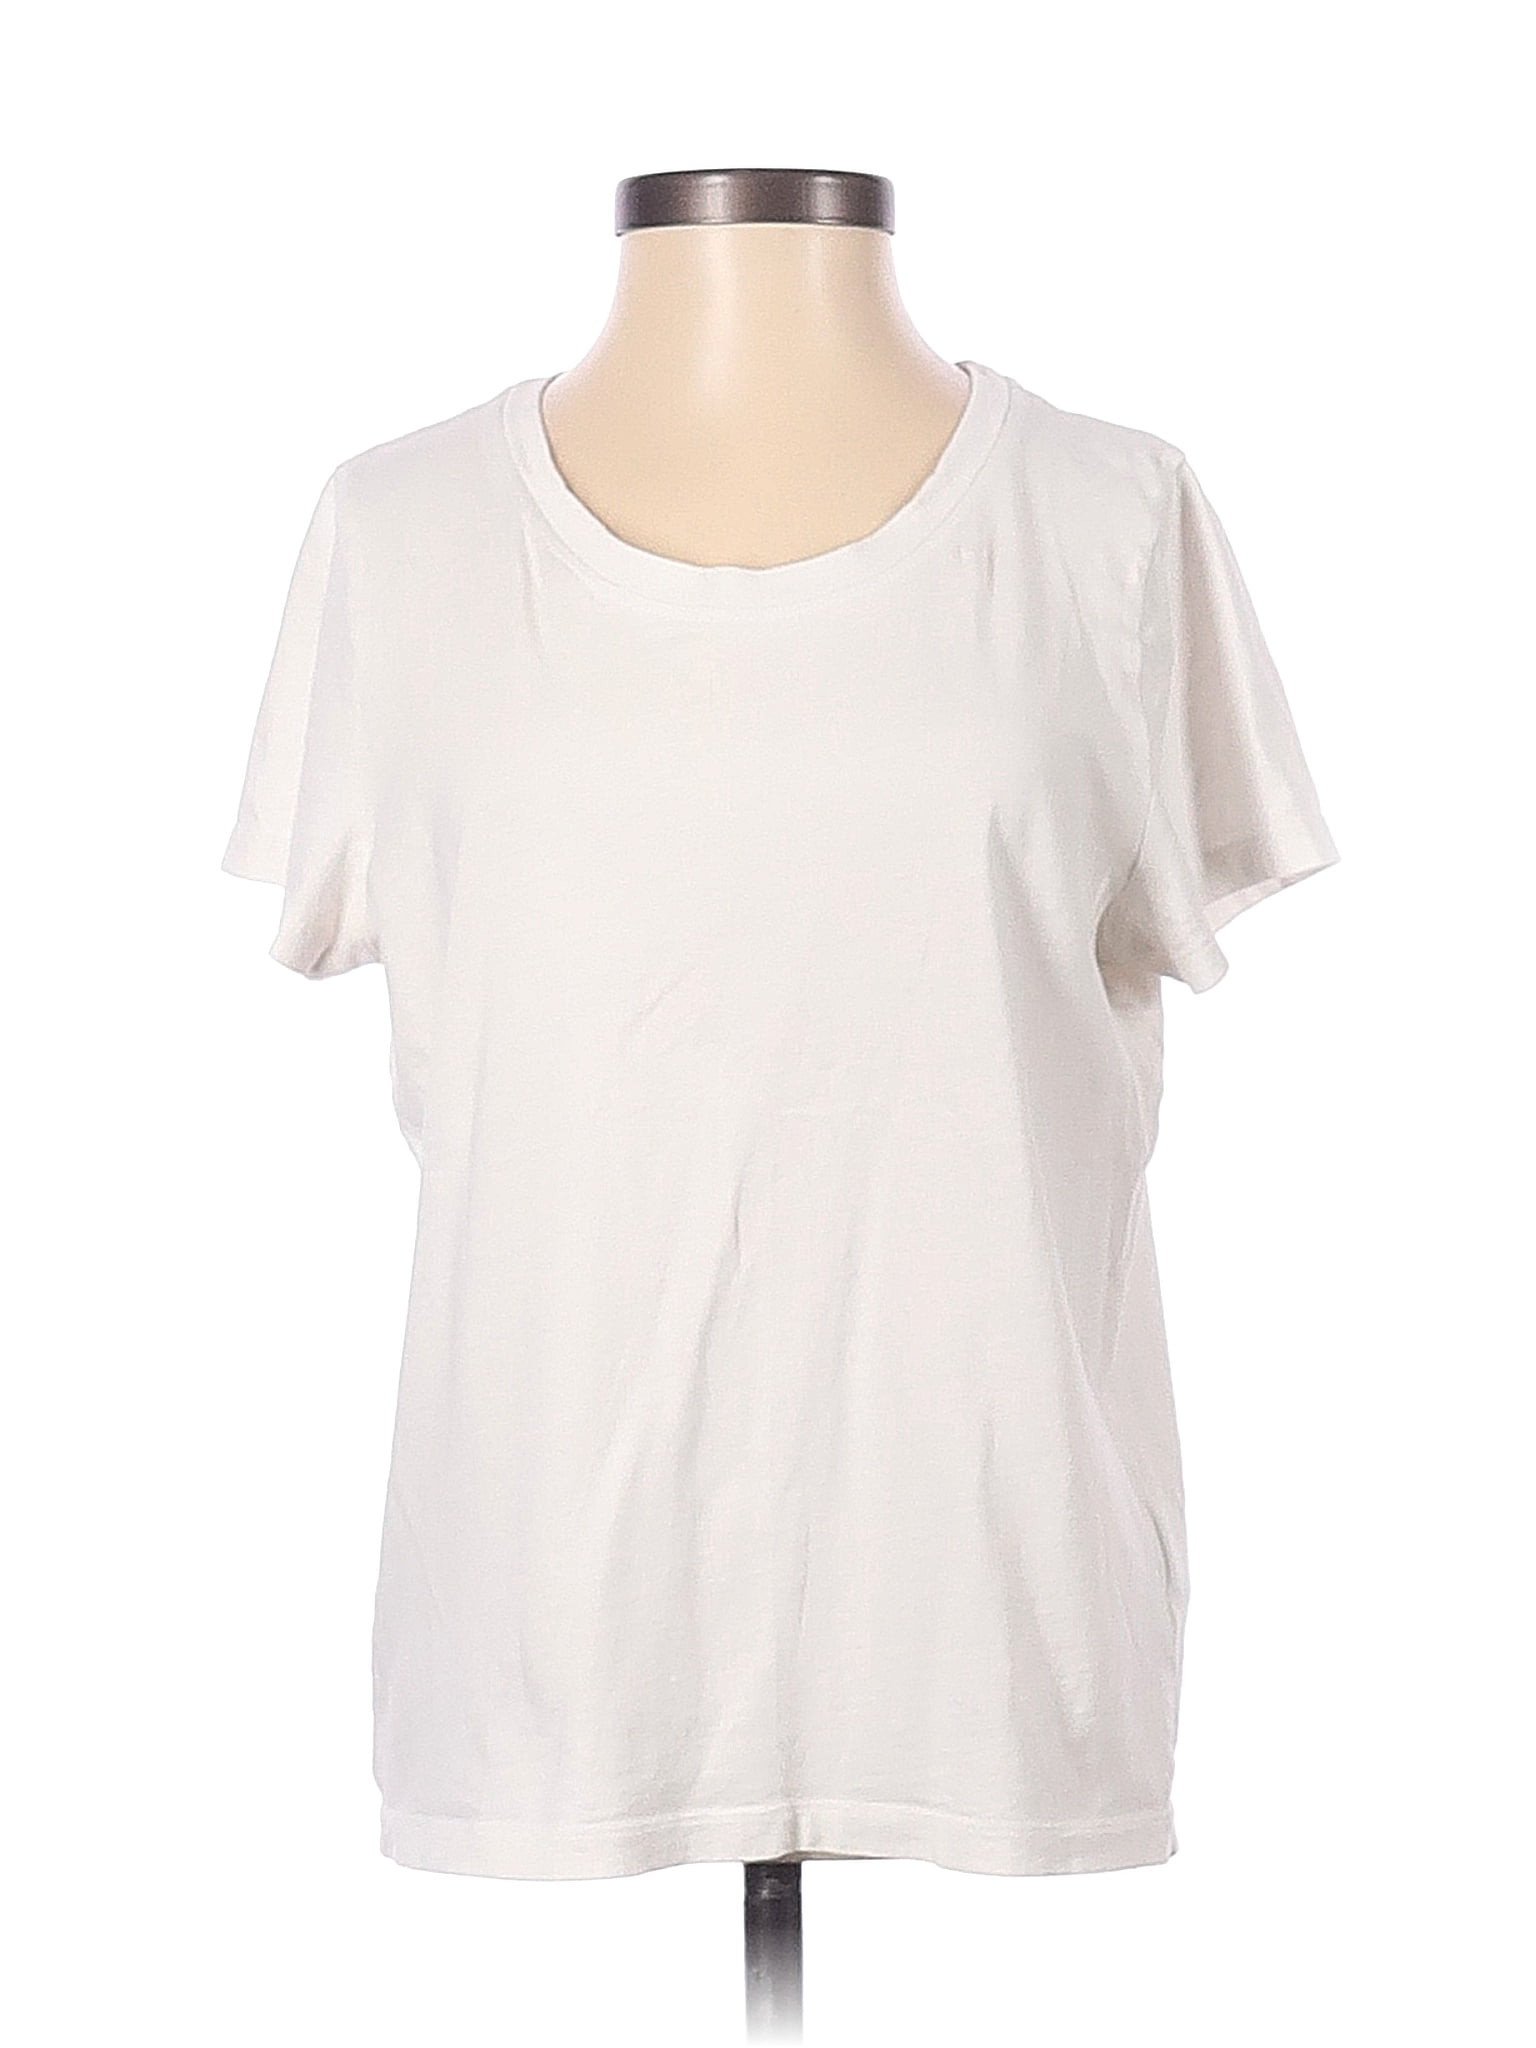 J.Crew 100% Cotton White Ivory Short Sleeve T-Shirt Size S - 64% off ...